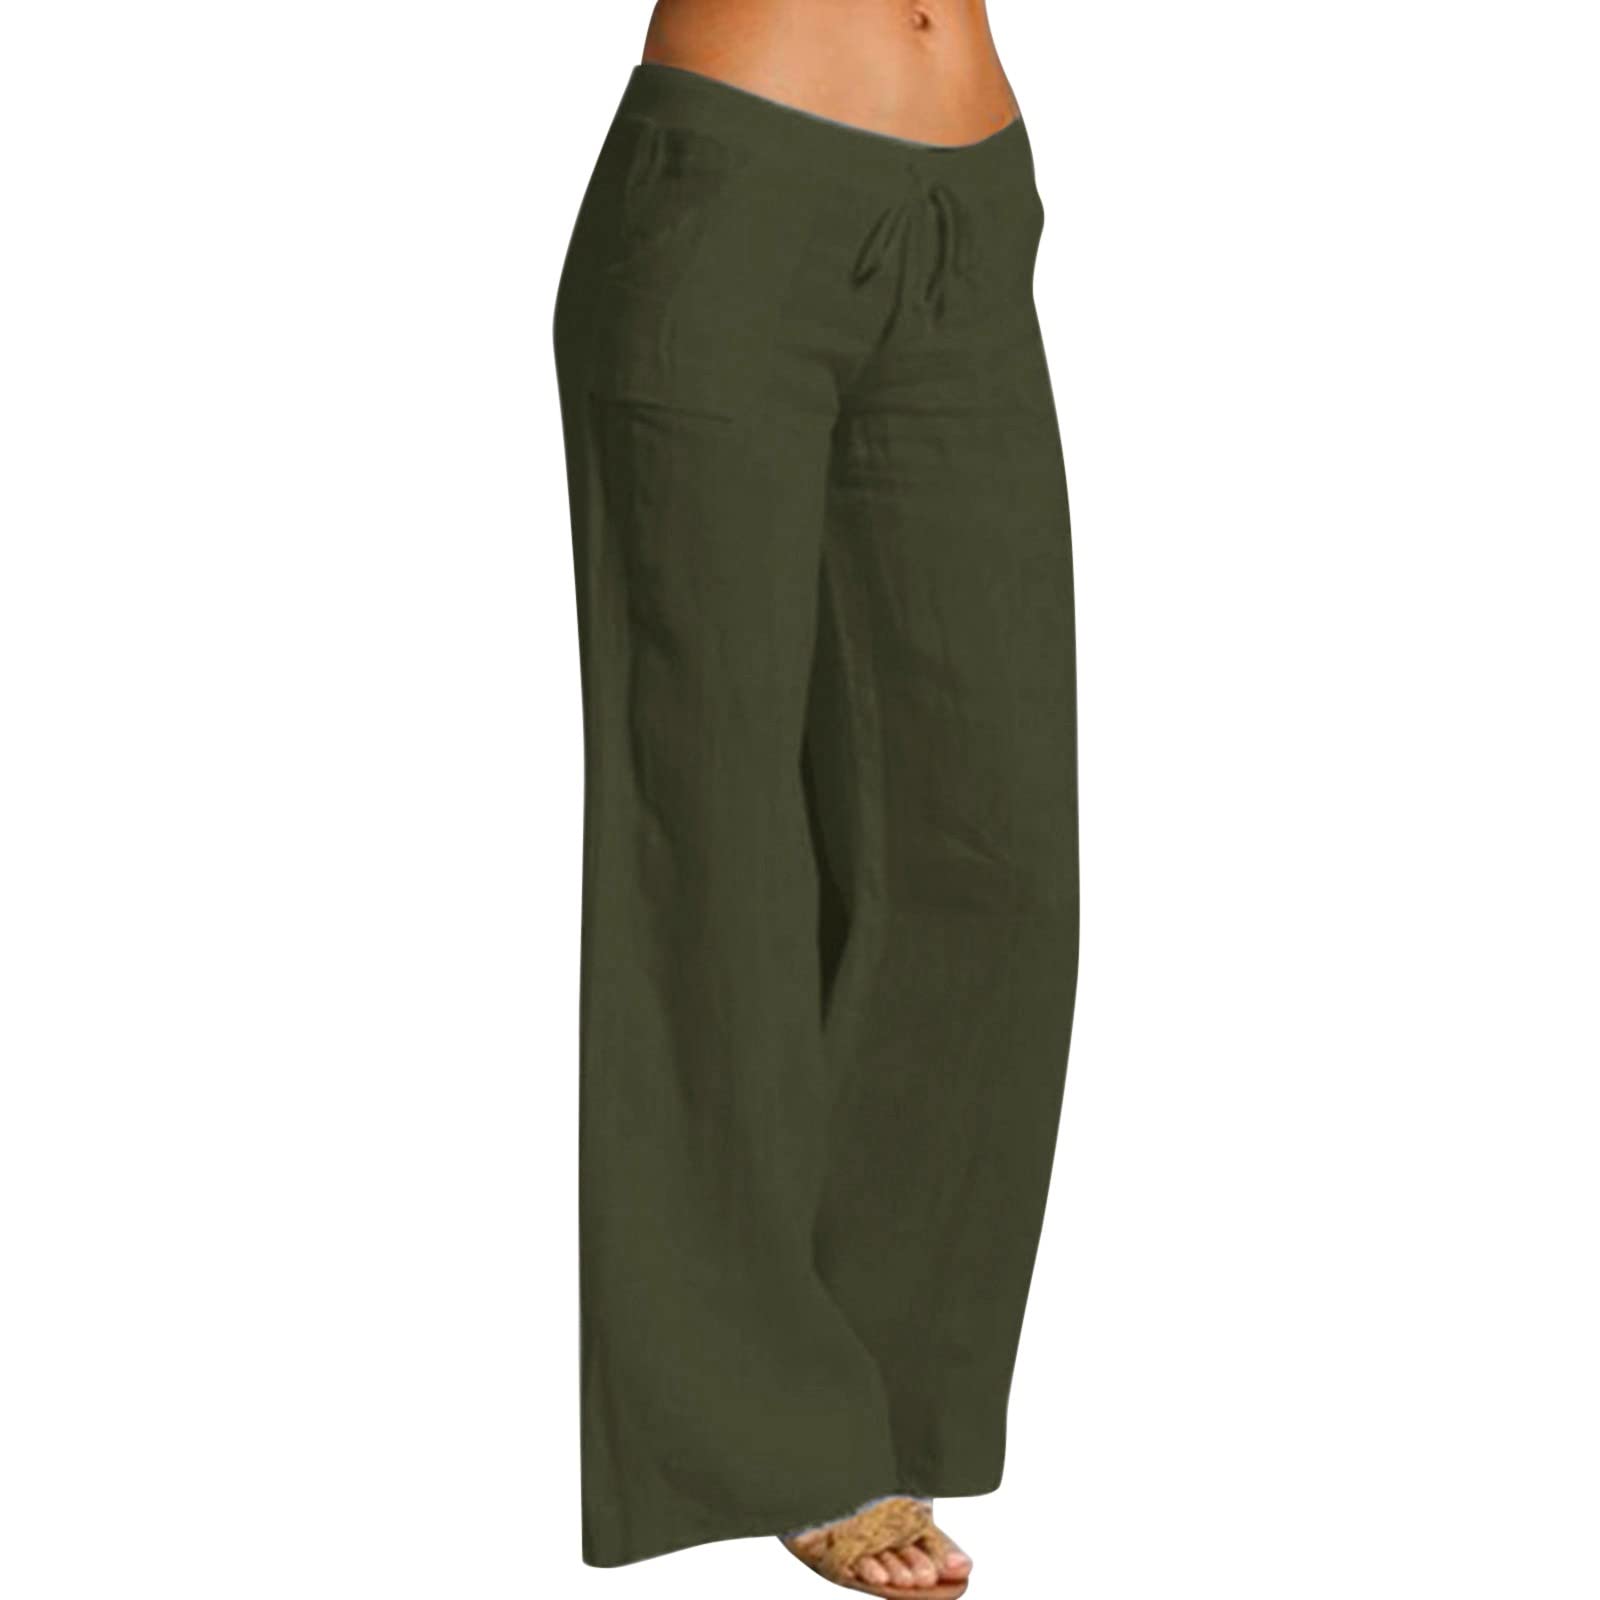 Buy FLOWY HAREM PANTS Women Hippie Pants Comfy Trousers Petite to